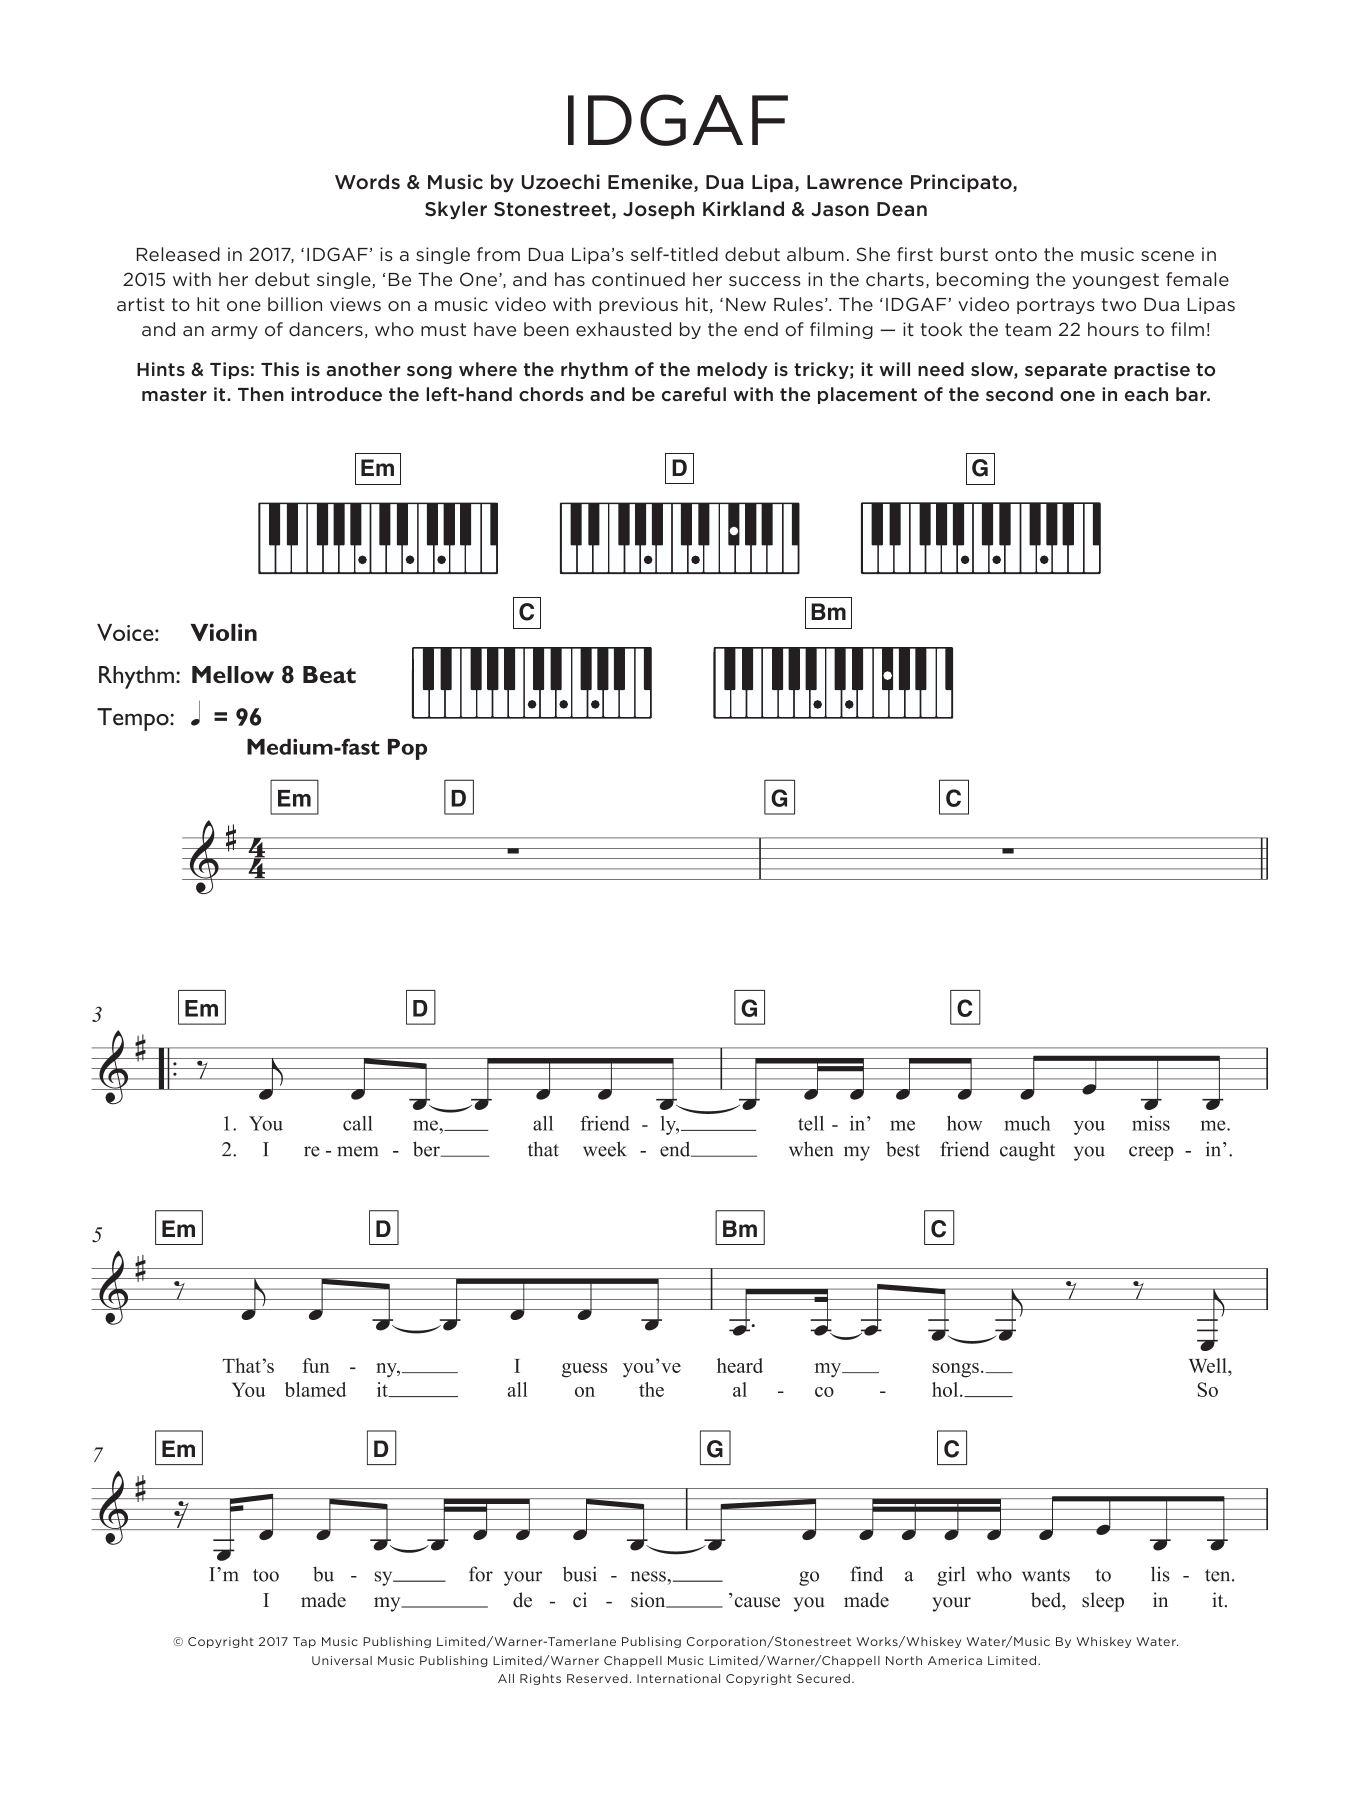 Download Dua Lipa IDGAF Sheet Music and learn how to play Keyboard PDF digital score in minutes